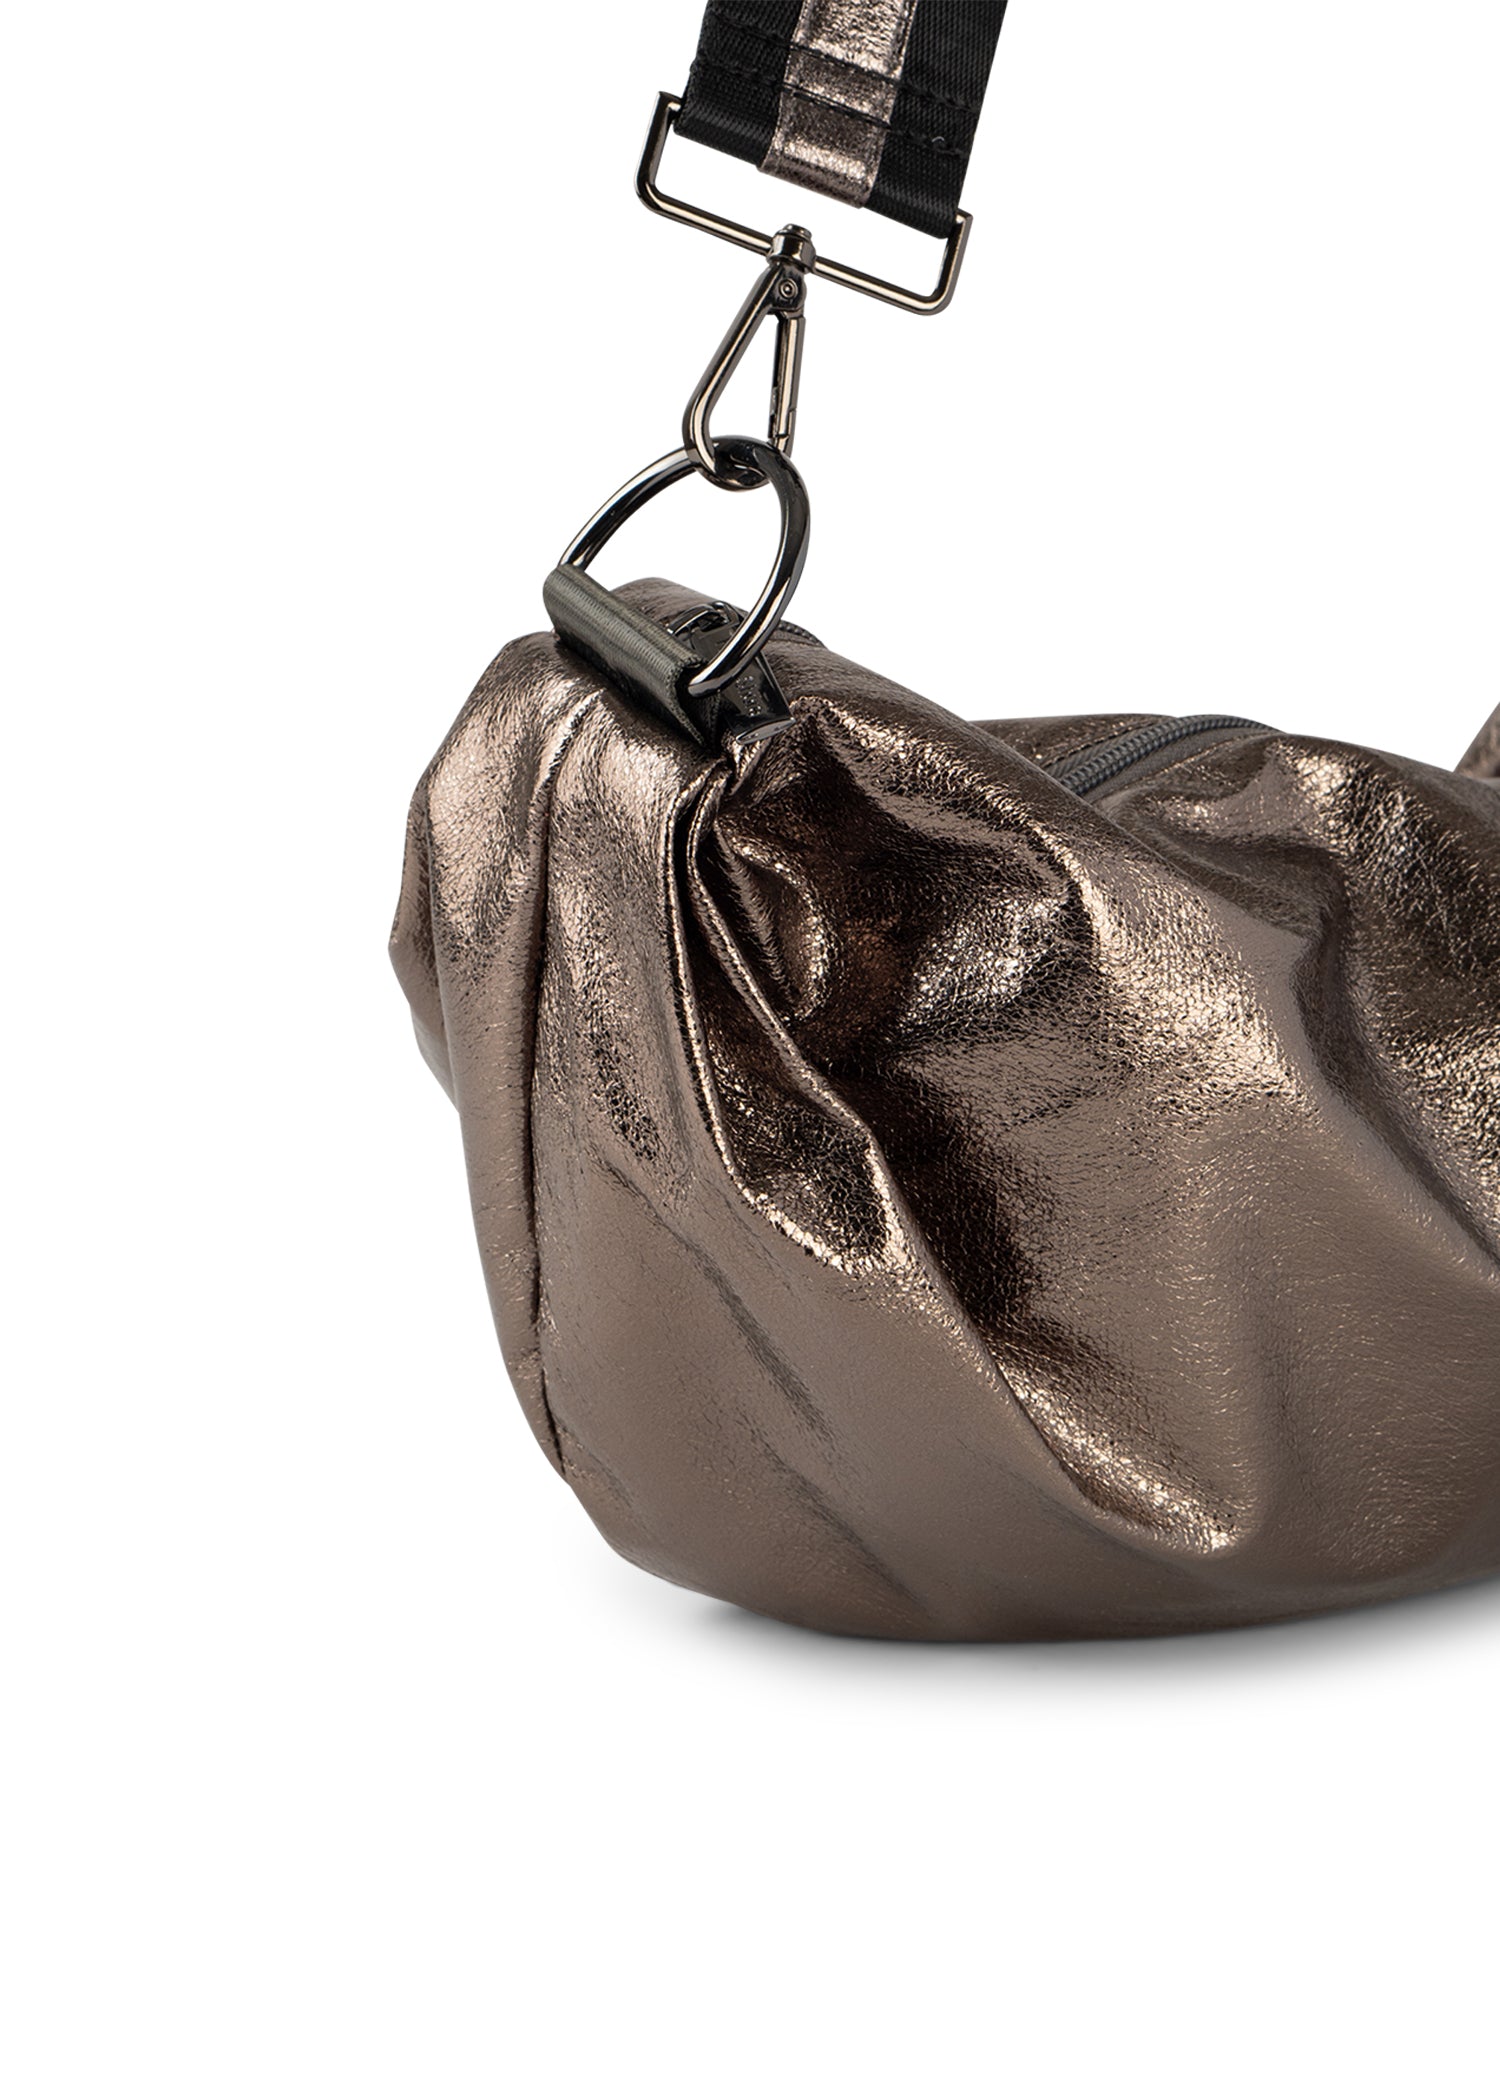 The Ollie Nova Sling Bag